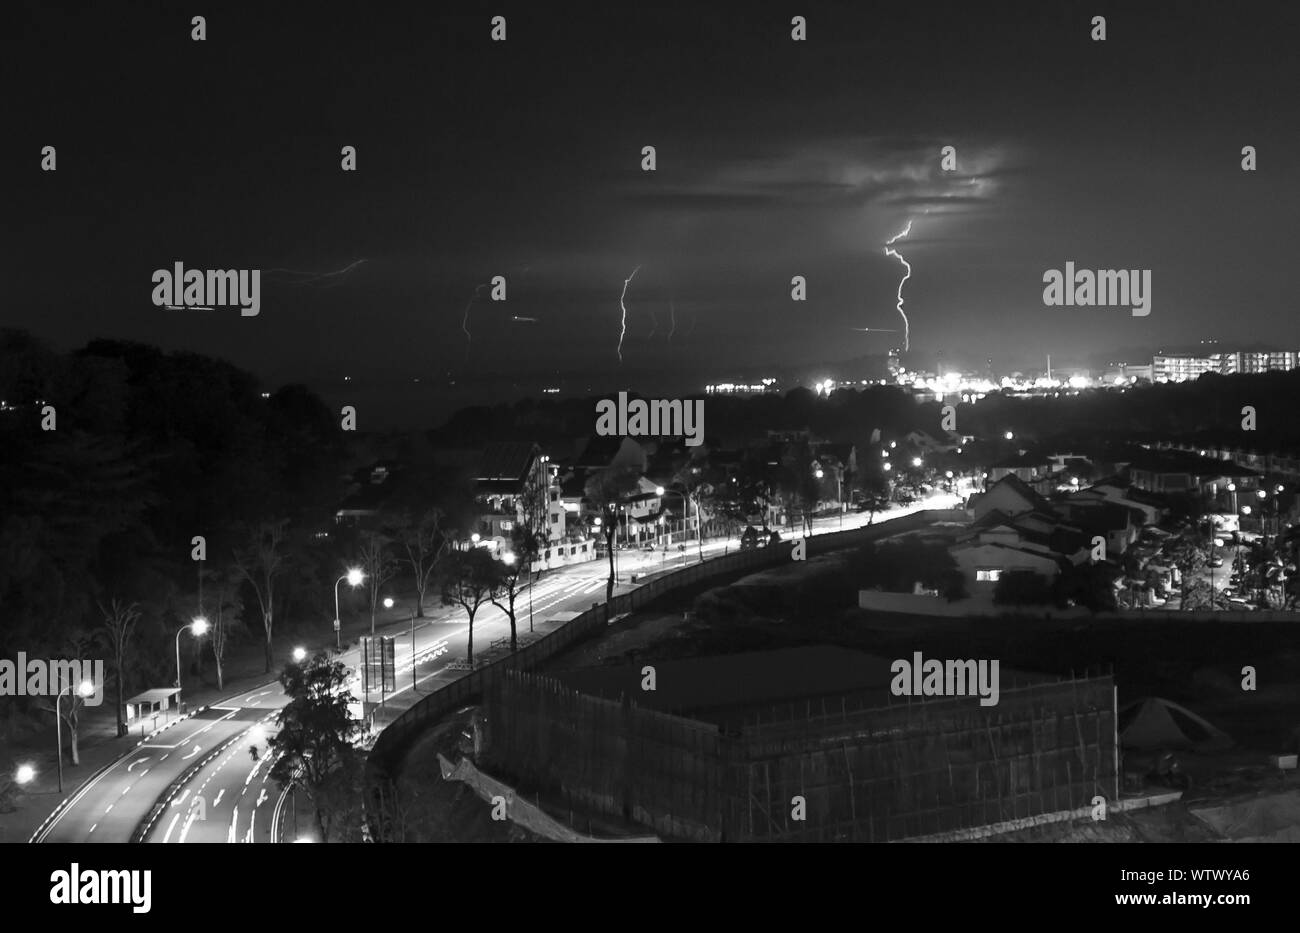 Lightnings Over A City Stock Photo